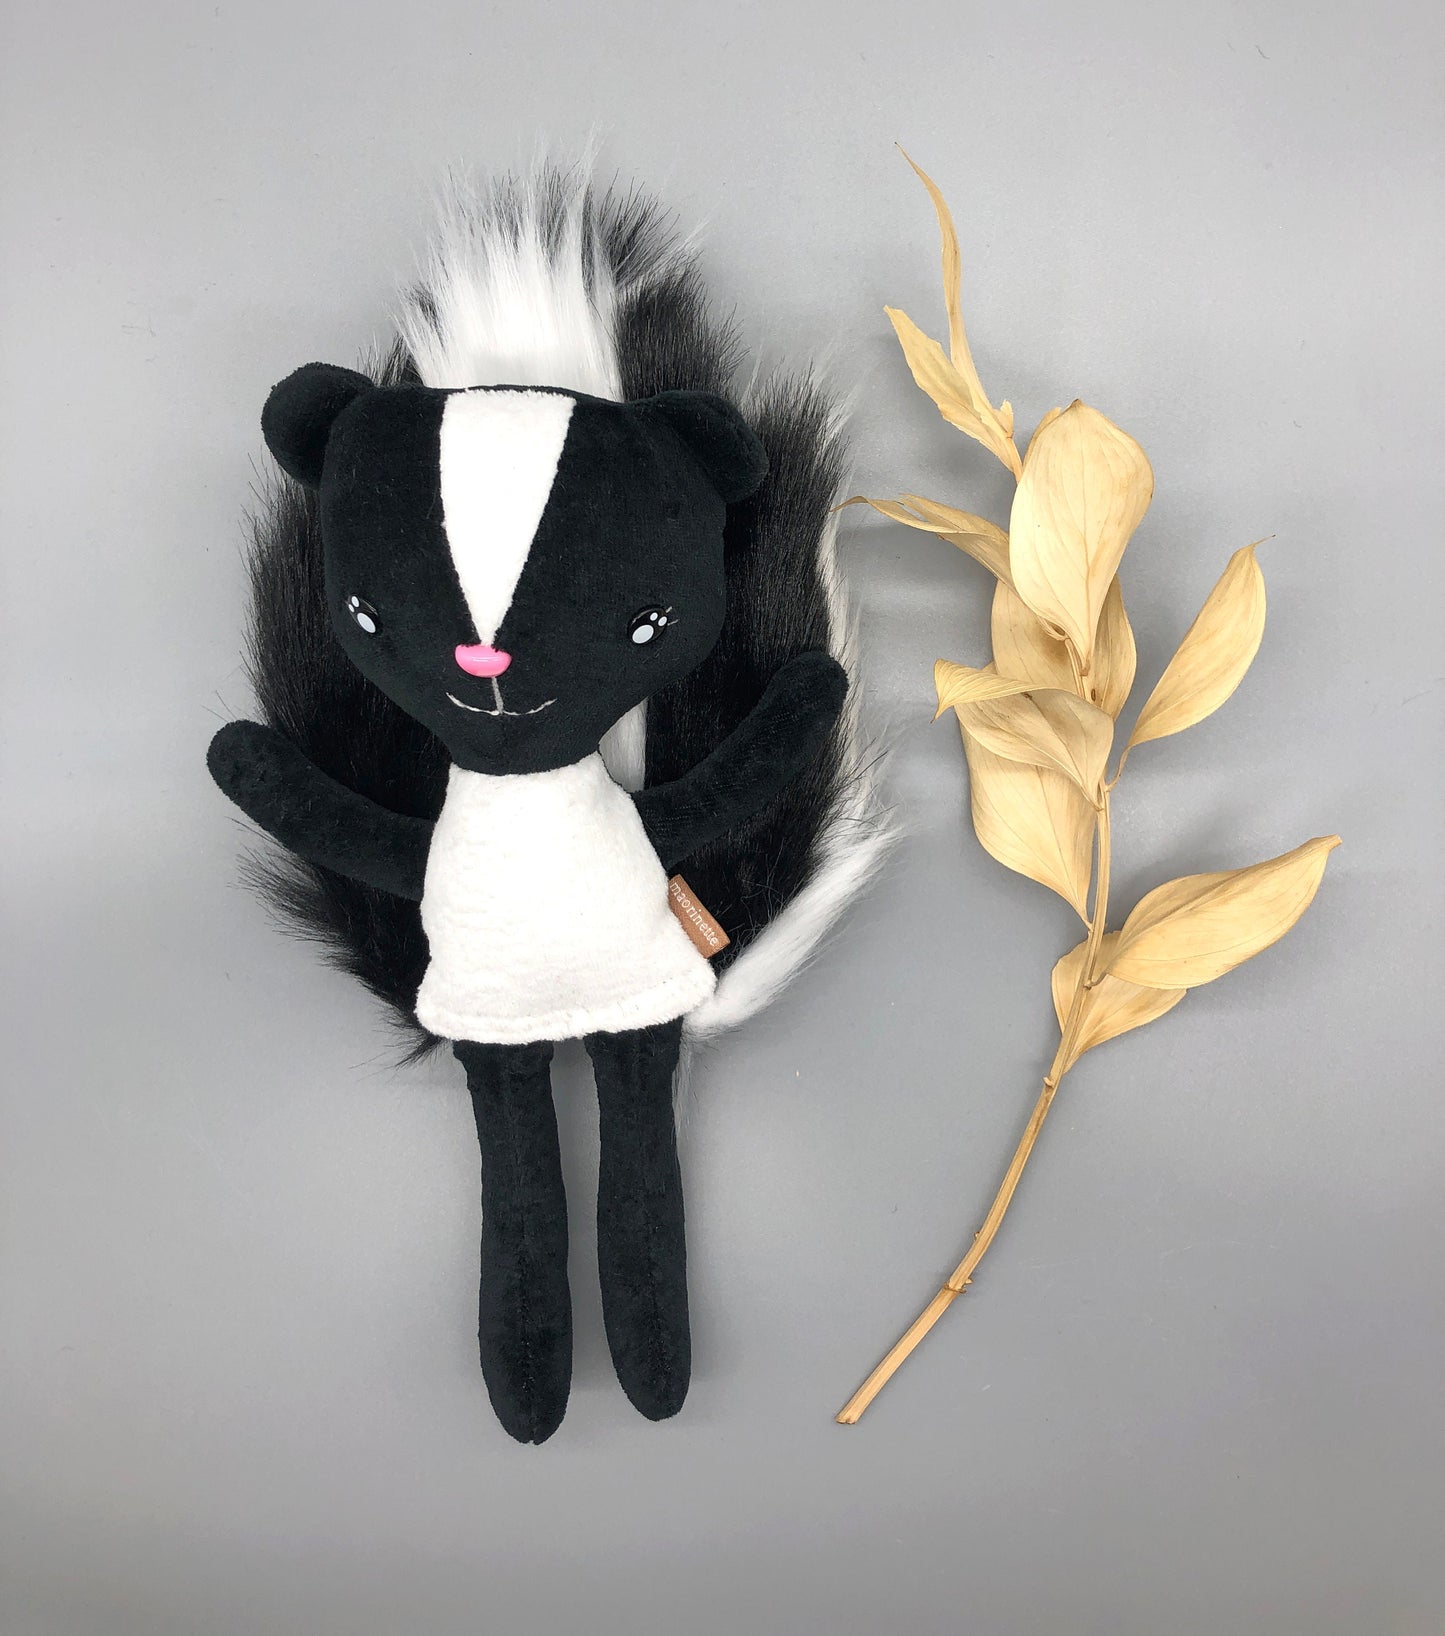 Handmade BABY SKUNK Doll, "PEPITO", Stuffed skunk, stuffed animals, boy doll, baby animals, skunk toys, gift for kids, skunk plushie